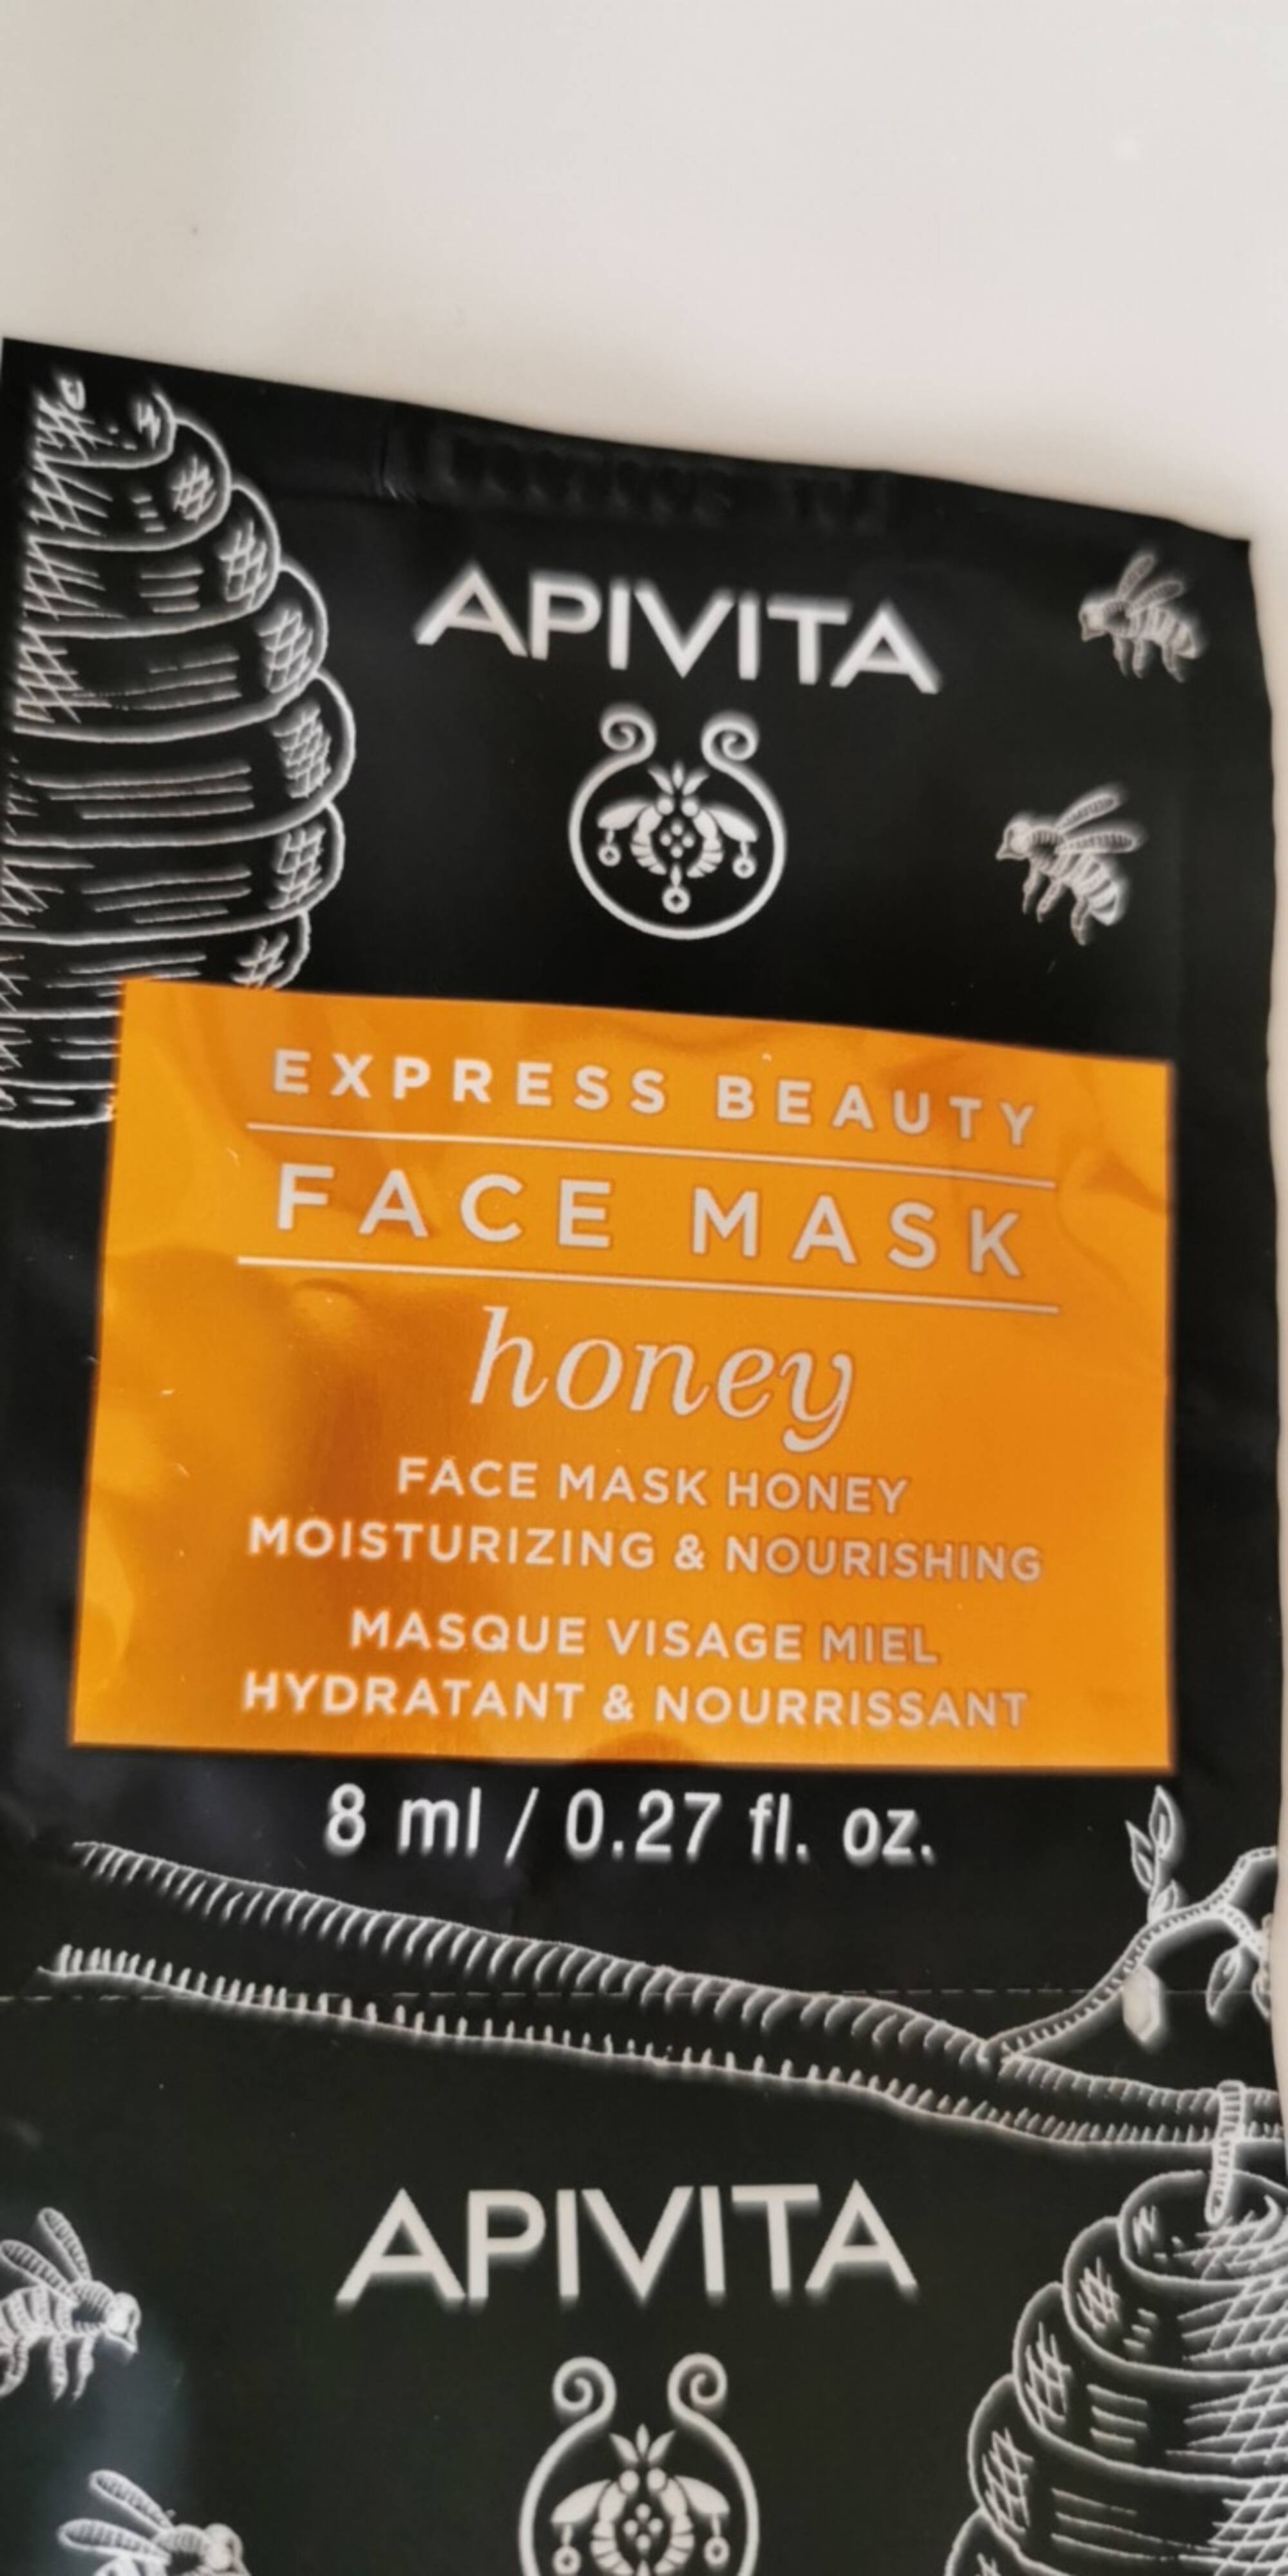 APIVITA - Masque visage miel - Hydratant & nourrissant